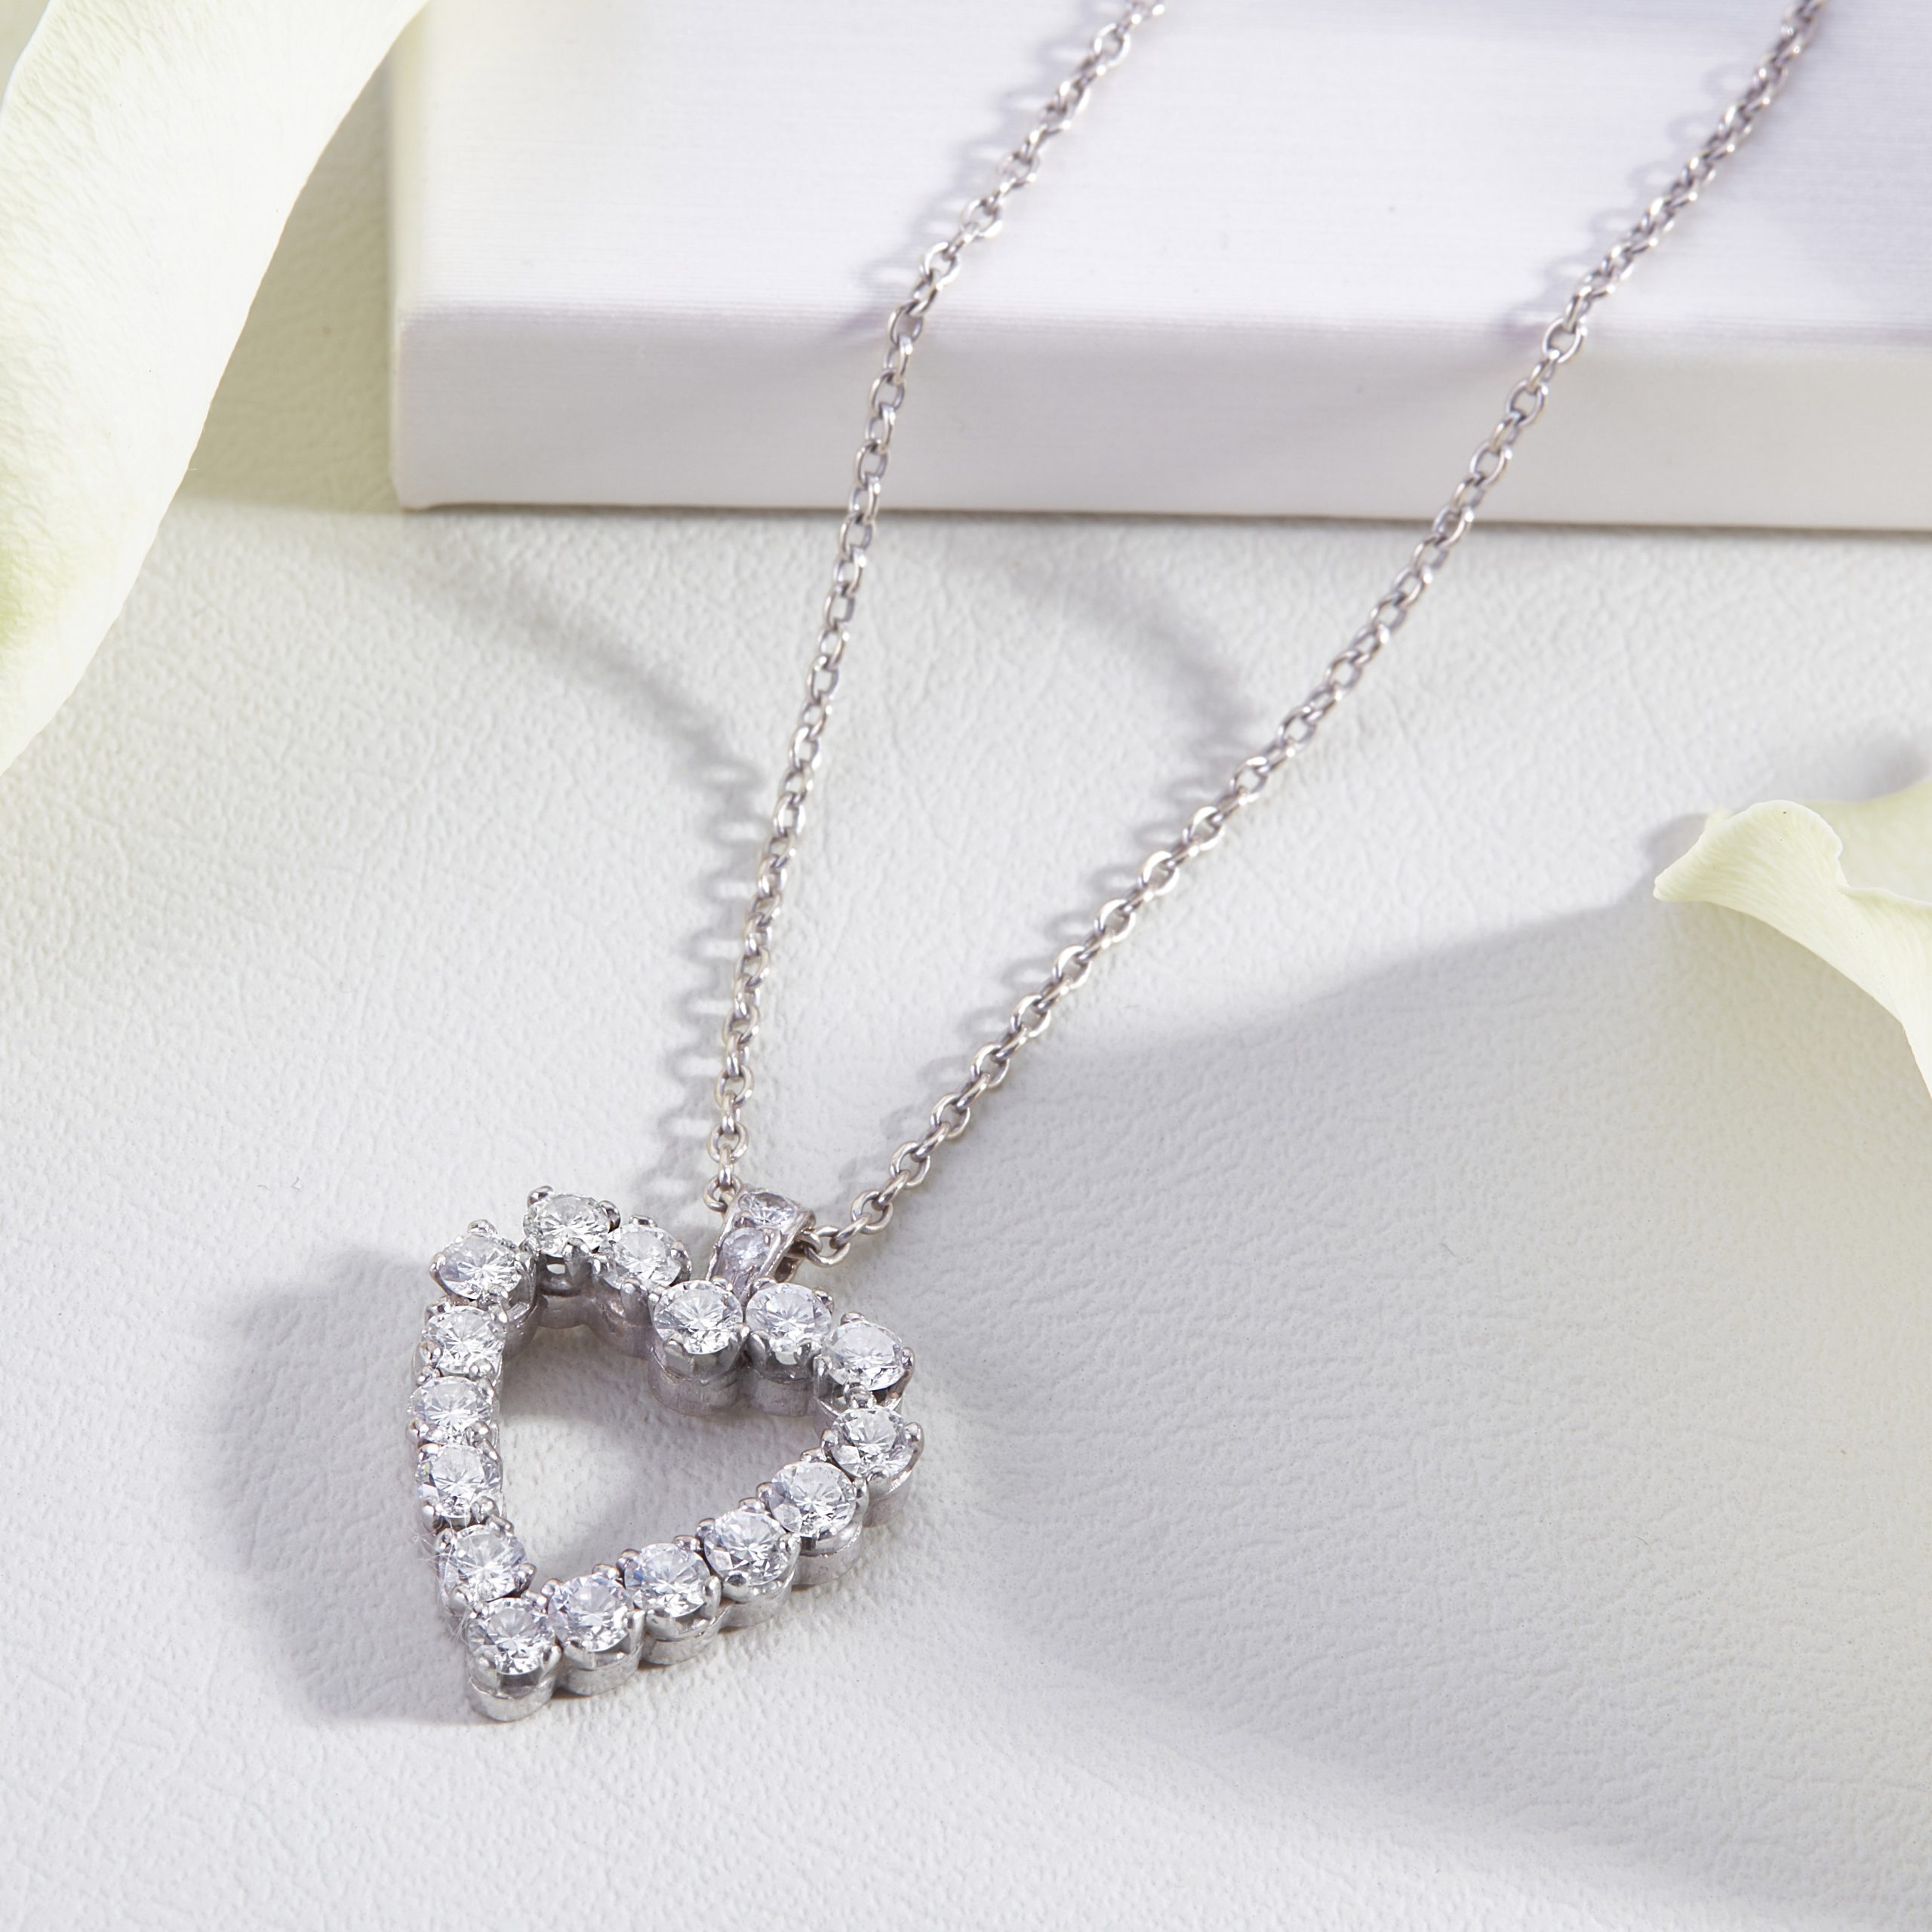 Necklace with diamond heart pendant by Lottie Leigh Bespoke Jewellery.